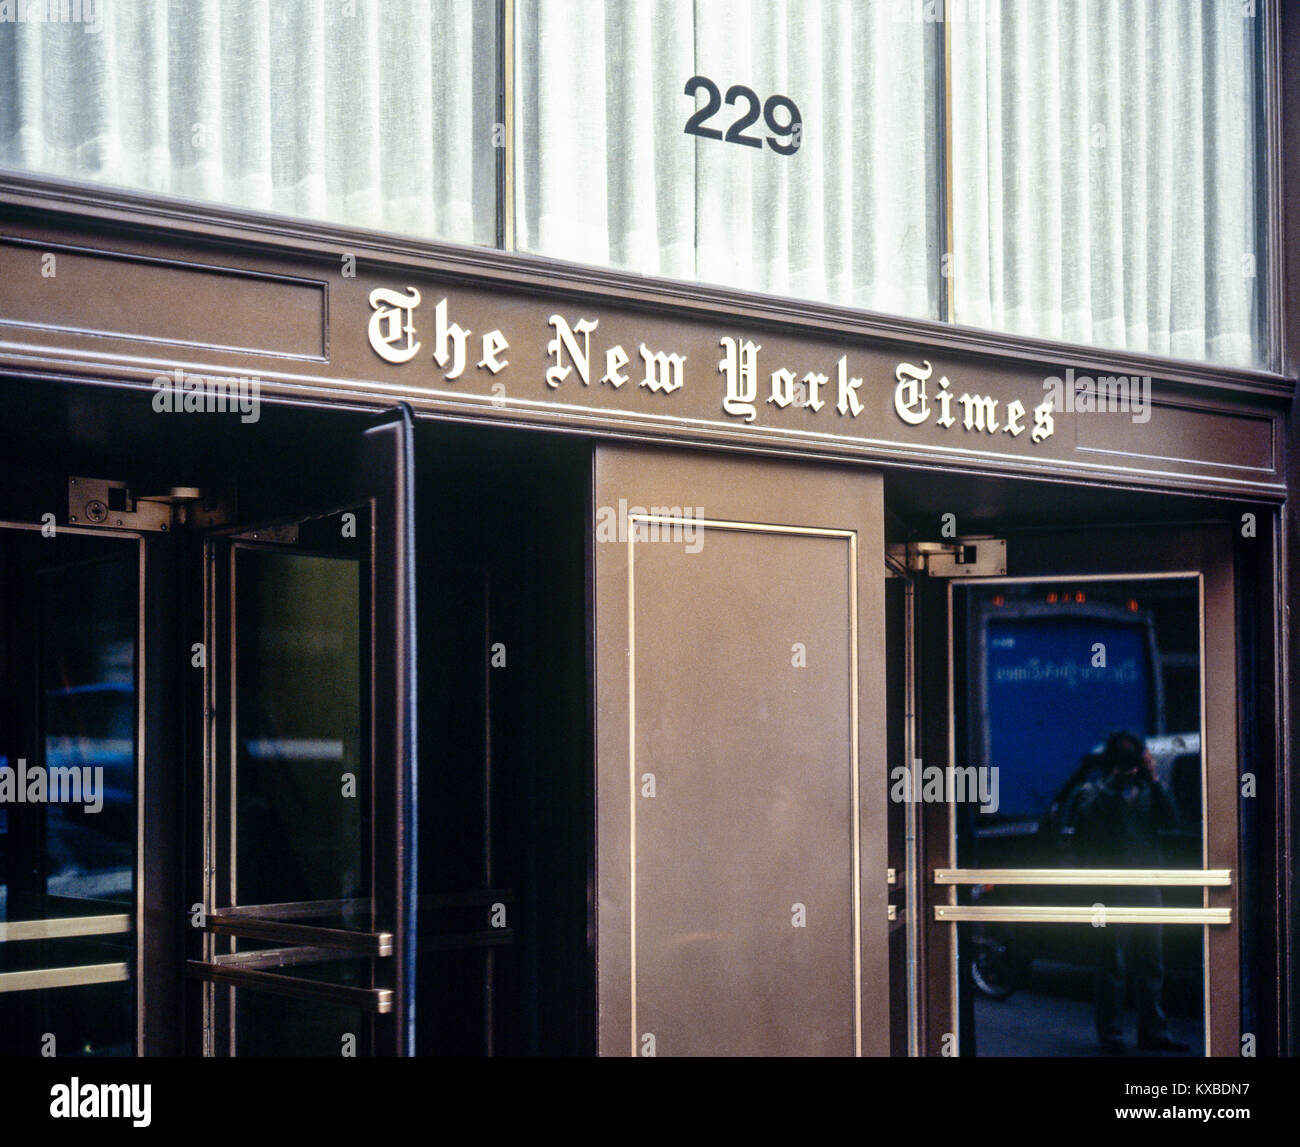 New York 1980s, entrée du journal New York Times, portes tournantes, 229 West 43rd Street, Manhattan, New York City, NY, NYC, ÉTATS-UNIS, Banque D'Images